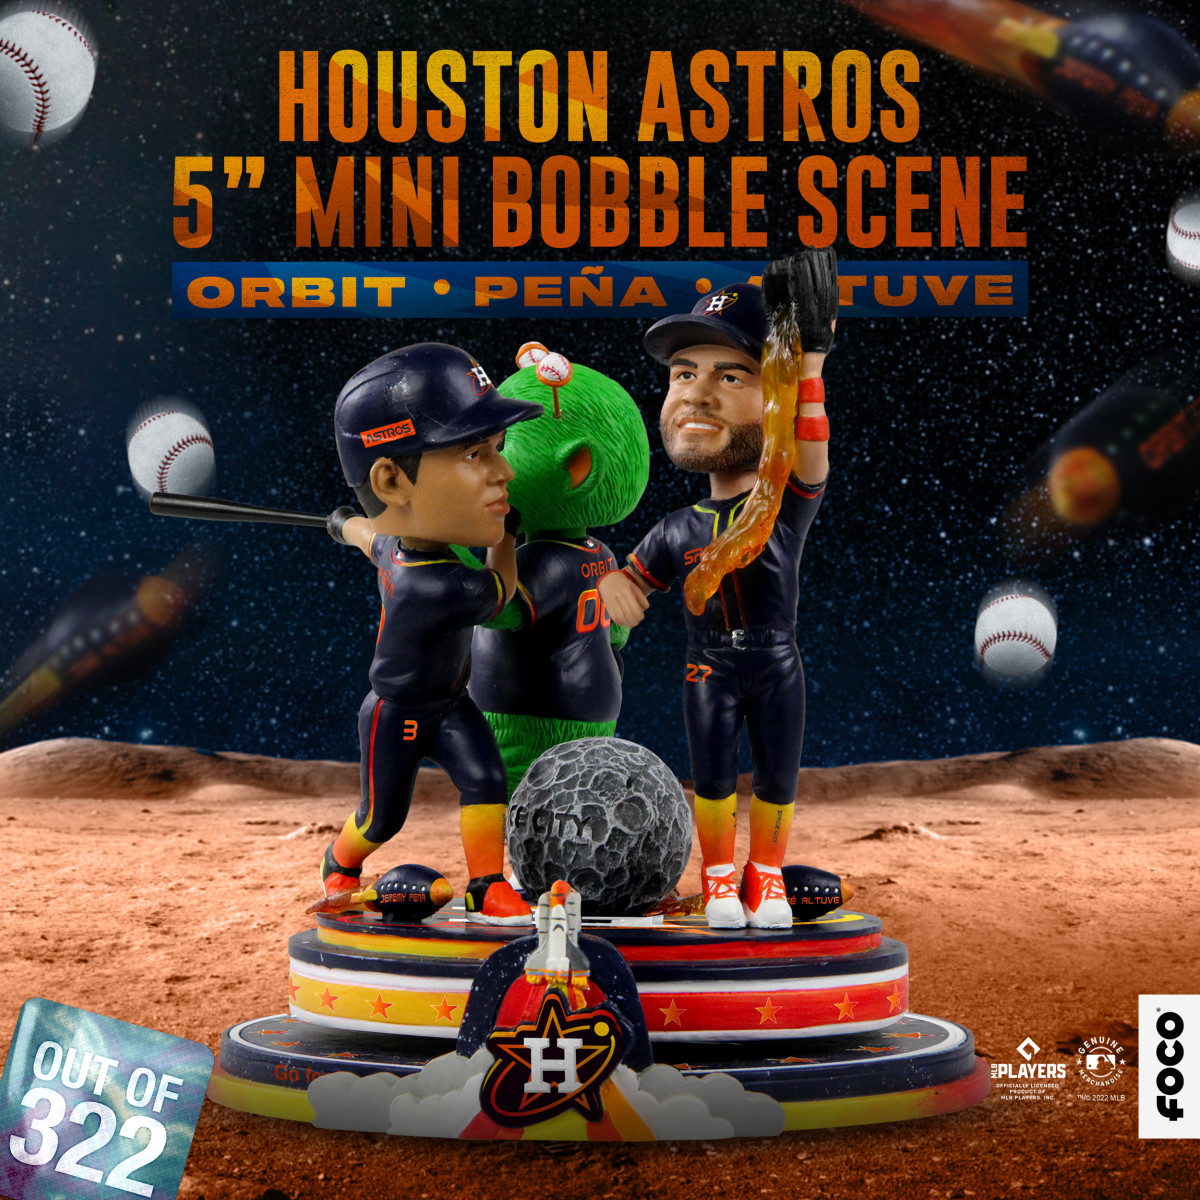 Houston Astros - Starting off this season's Bobblehead of